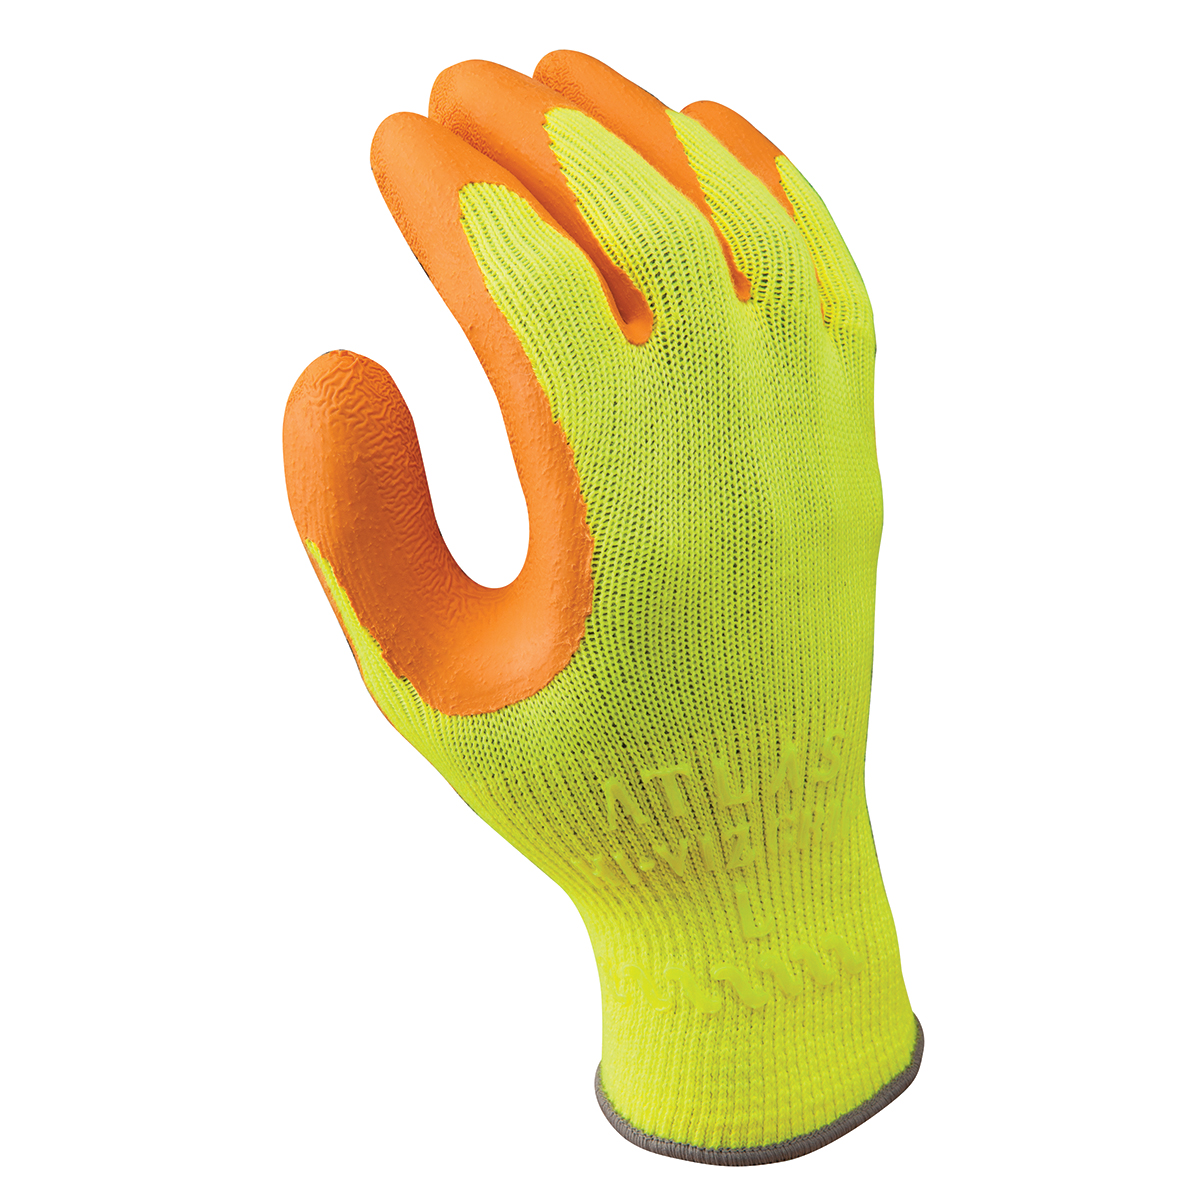 General purpose, palm coated, orange natural rubber, wrinkle finish, ergonomic seamless Hi-Viz bright yellow knitted liner,  large - General Purpose